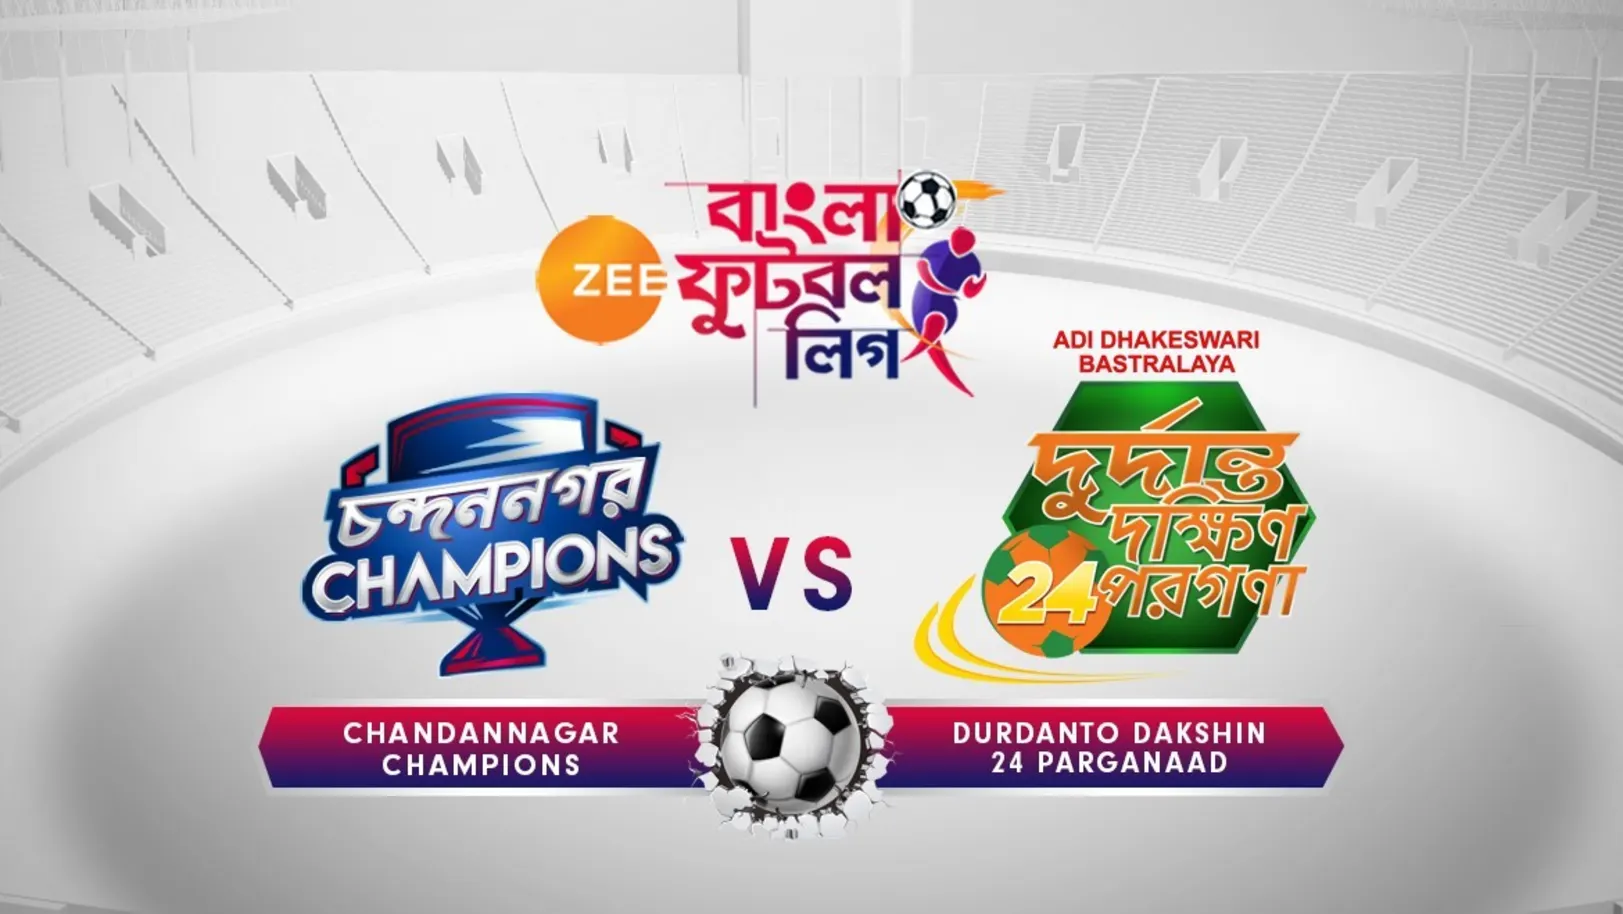 Chandannagar Champions vs ADBD Dakshin 24 Pargana - June 17 - ZBFL 2019 Episode 36